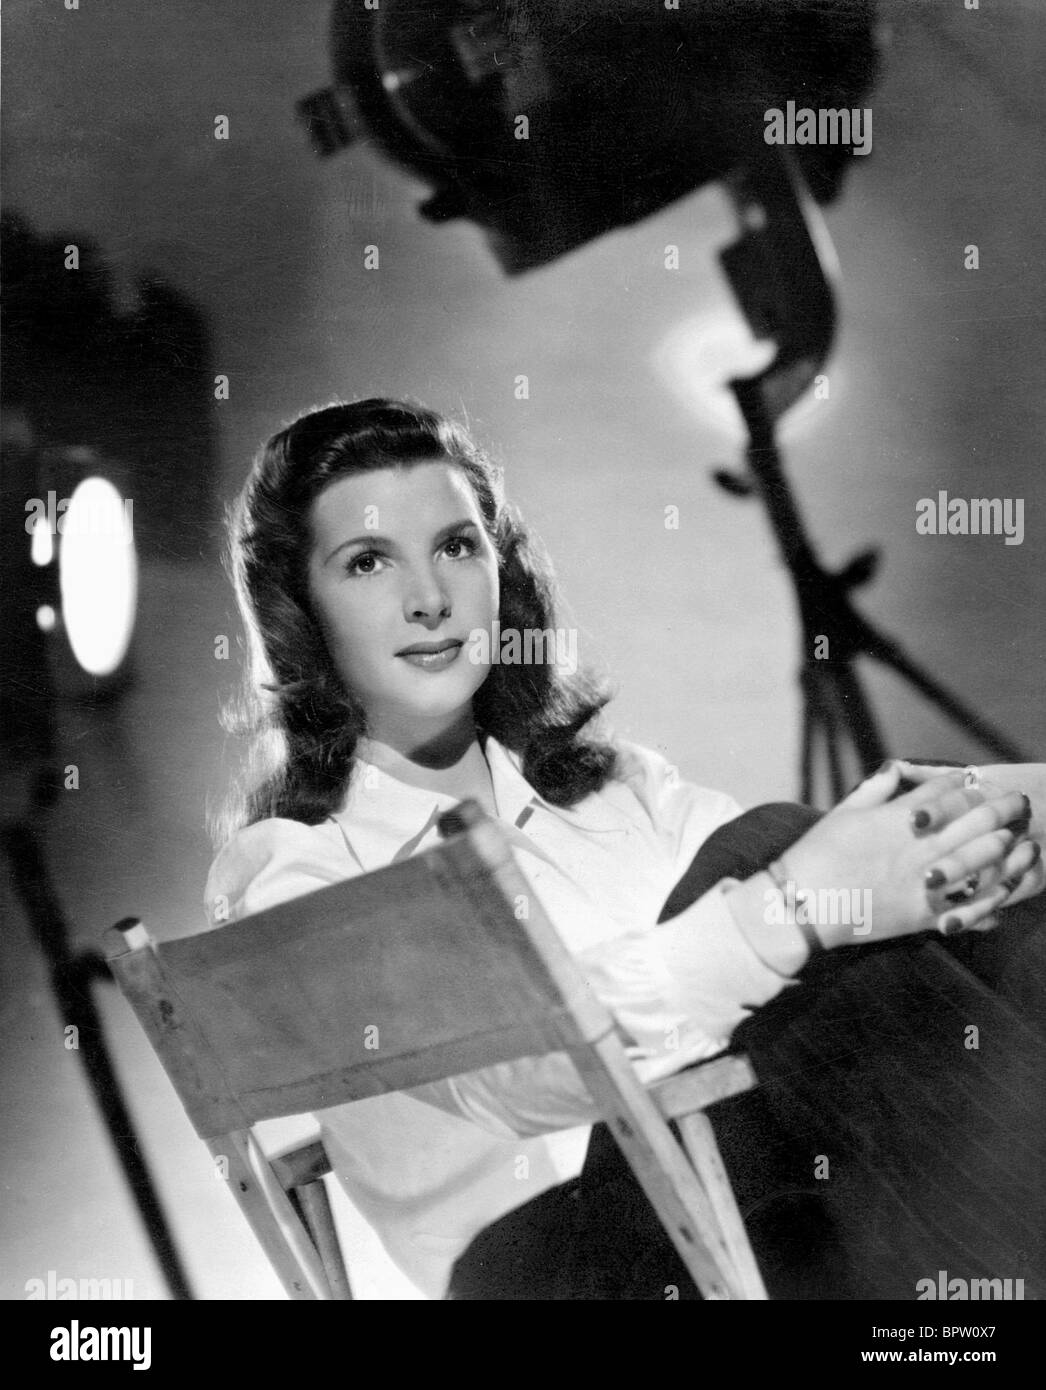 PATRICIA ROC SCHAUSPIELERIN (1948 Stockfotografie - Alamy